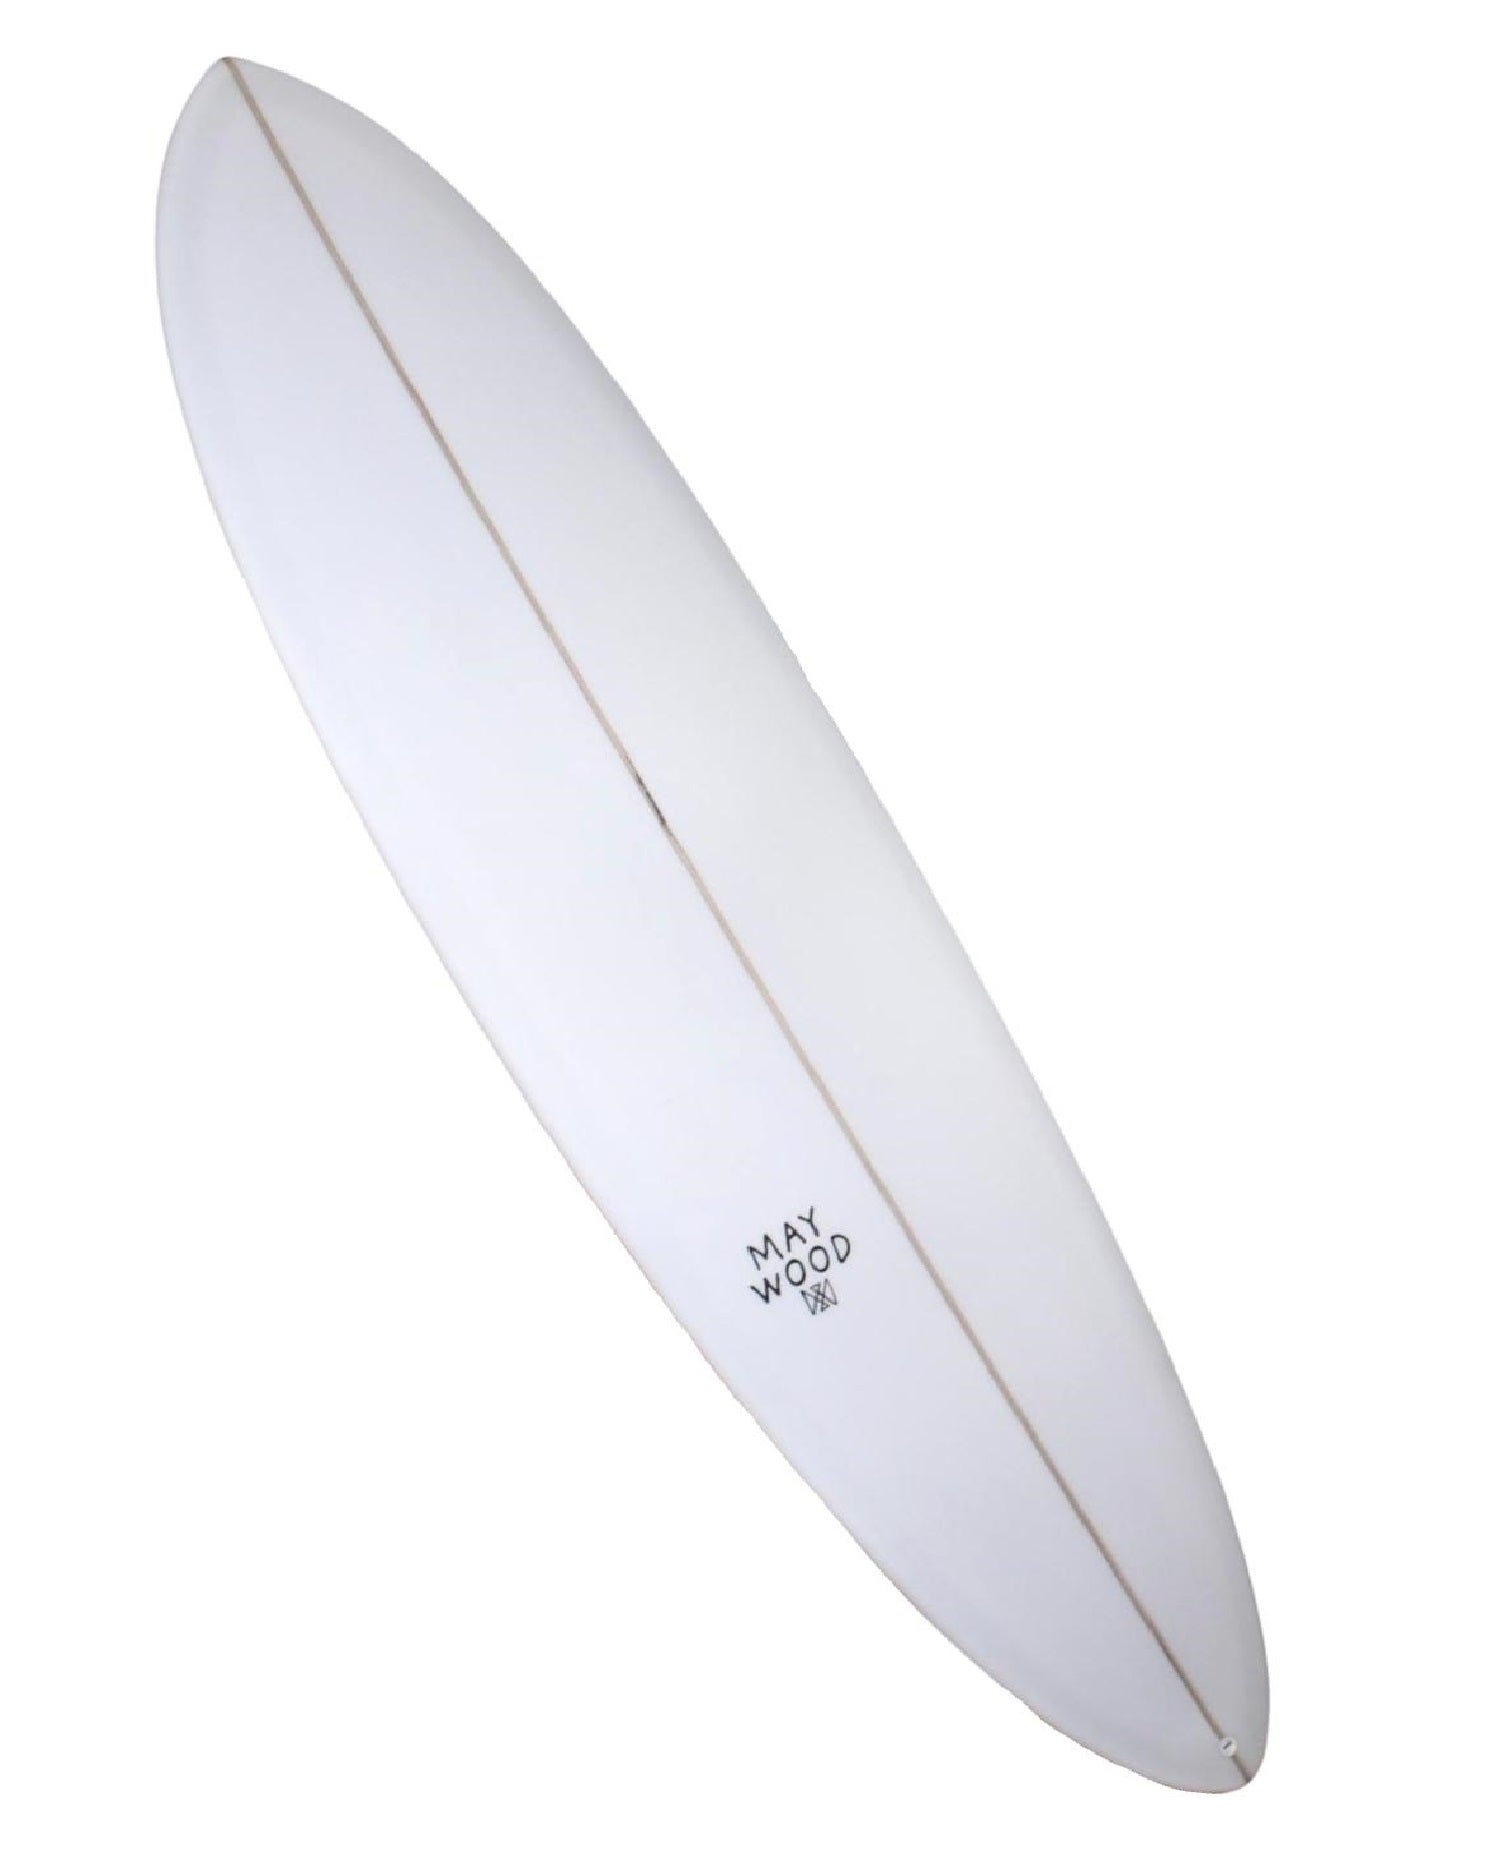 MAYWOOD 'MID-LENGTH' SURFBOARD